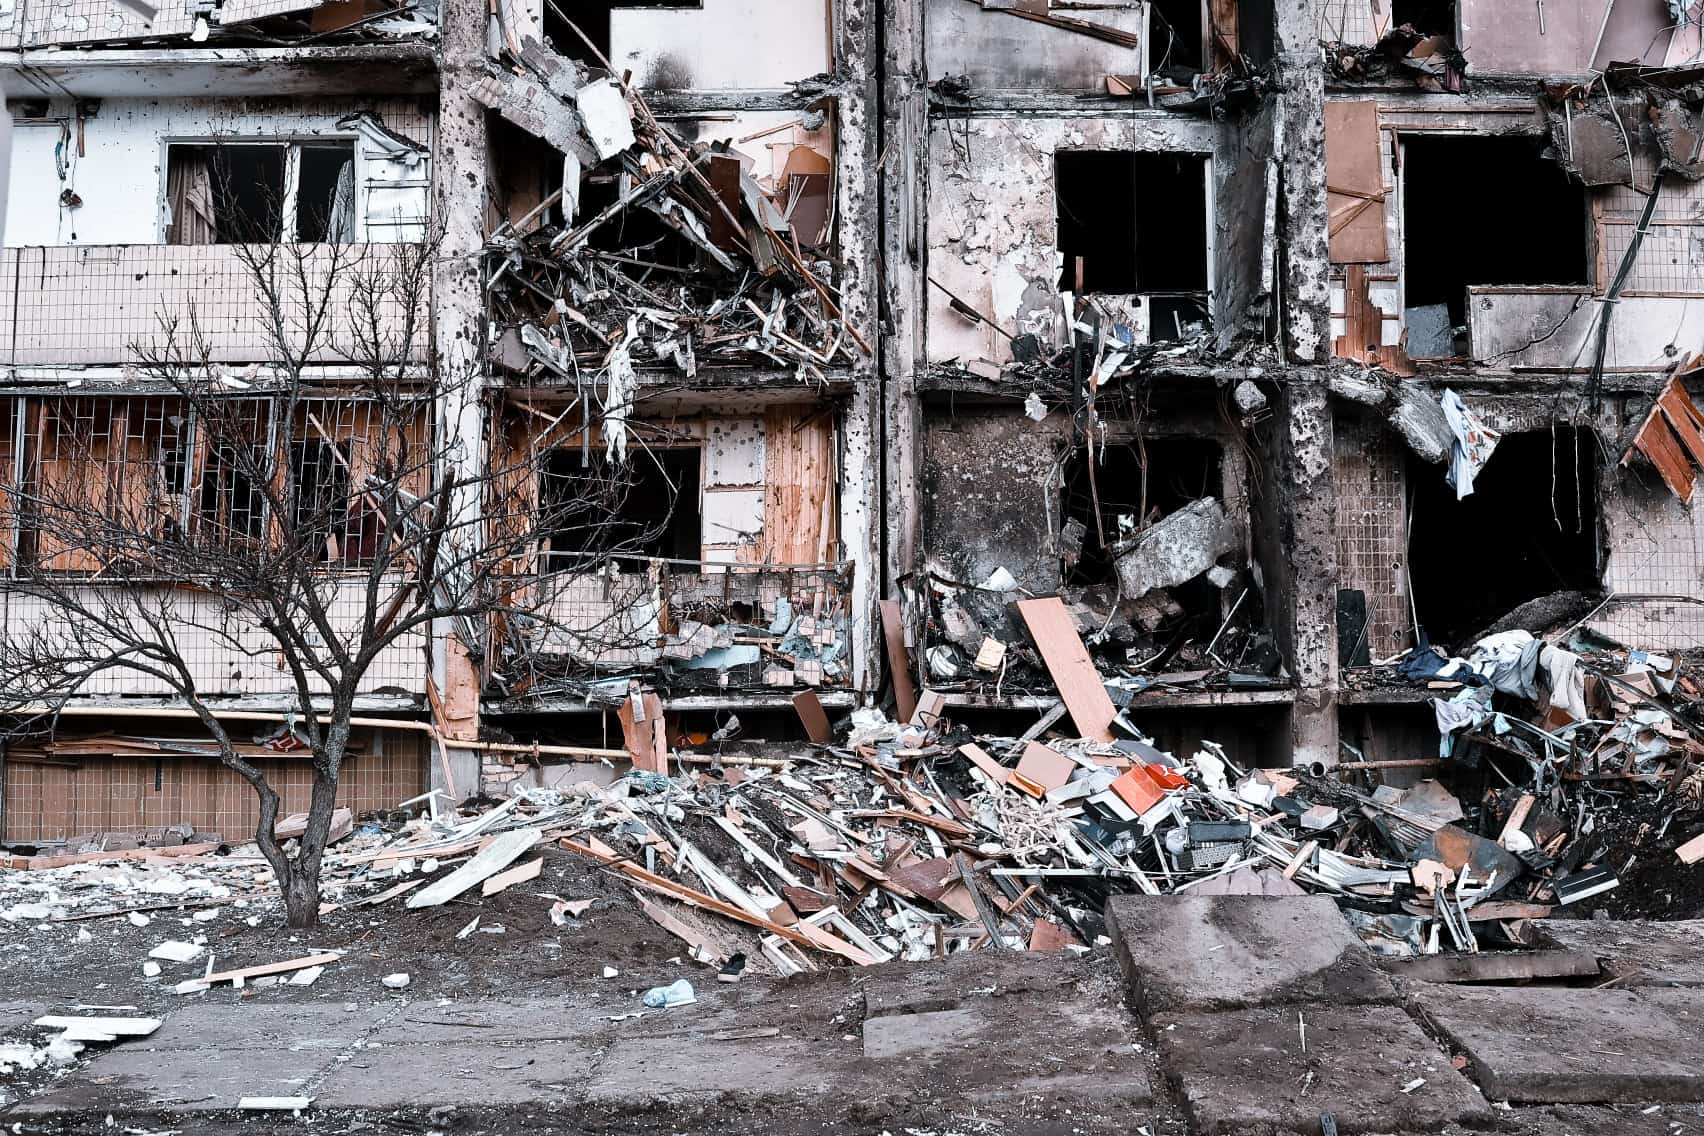 Kyiv resident shares photos of ‘surreal’ damage to Ukraine’s capital